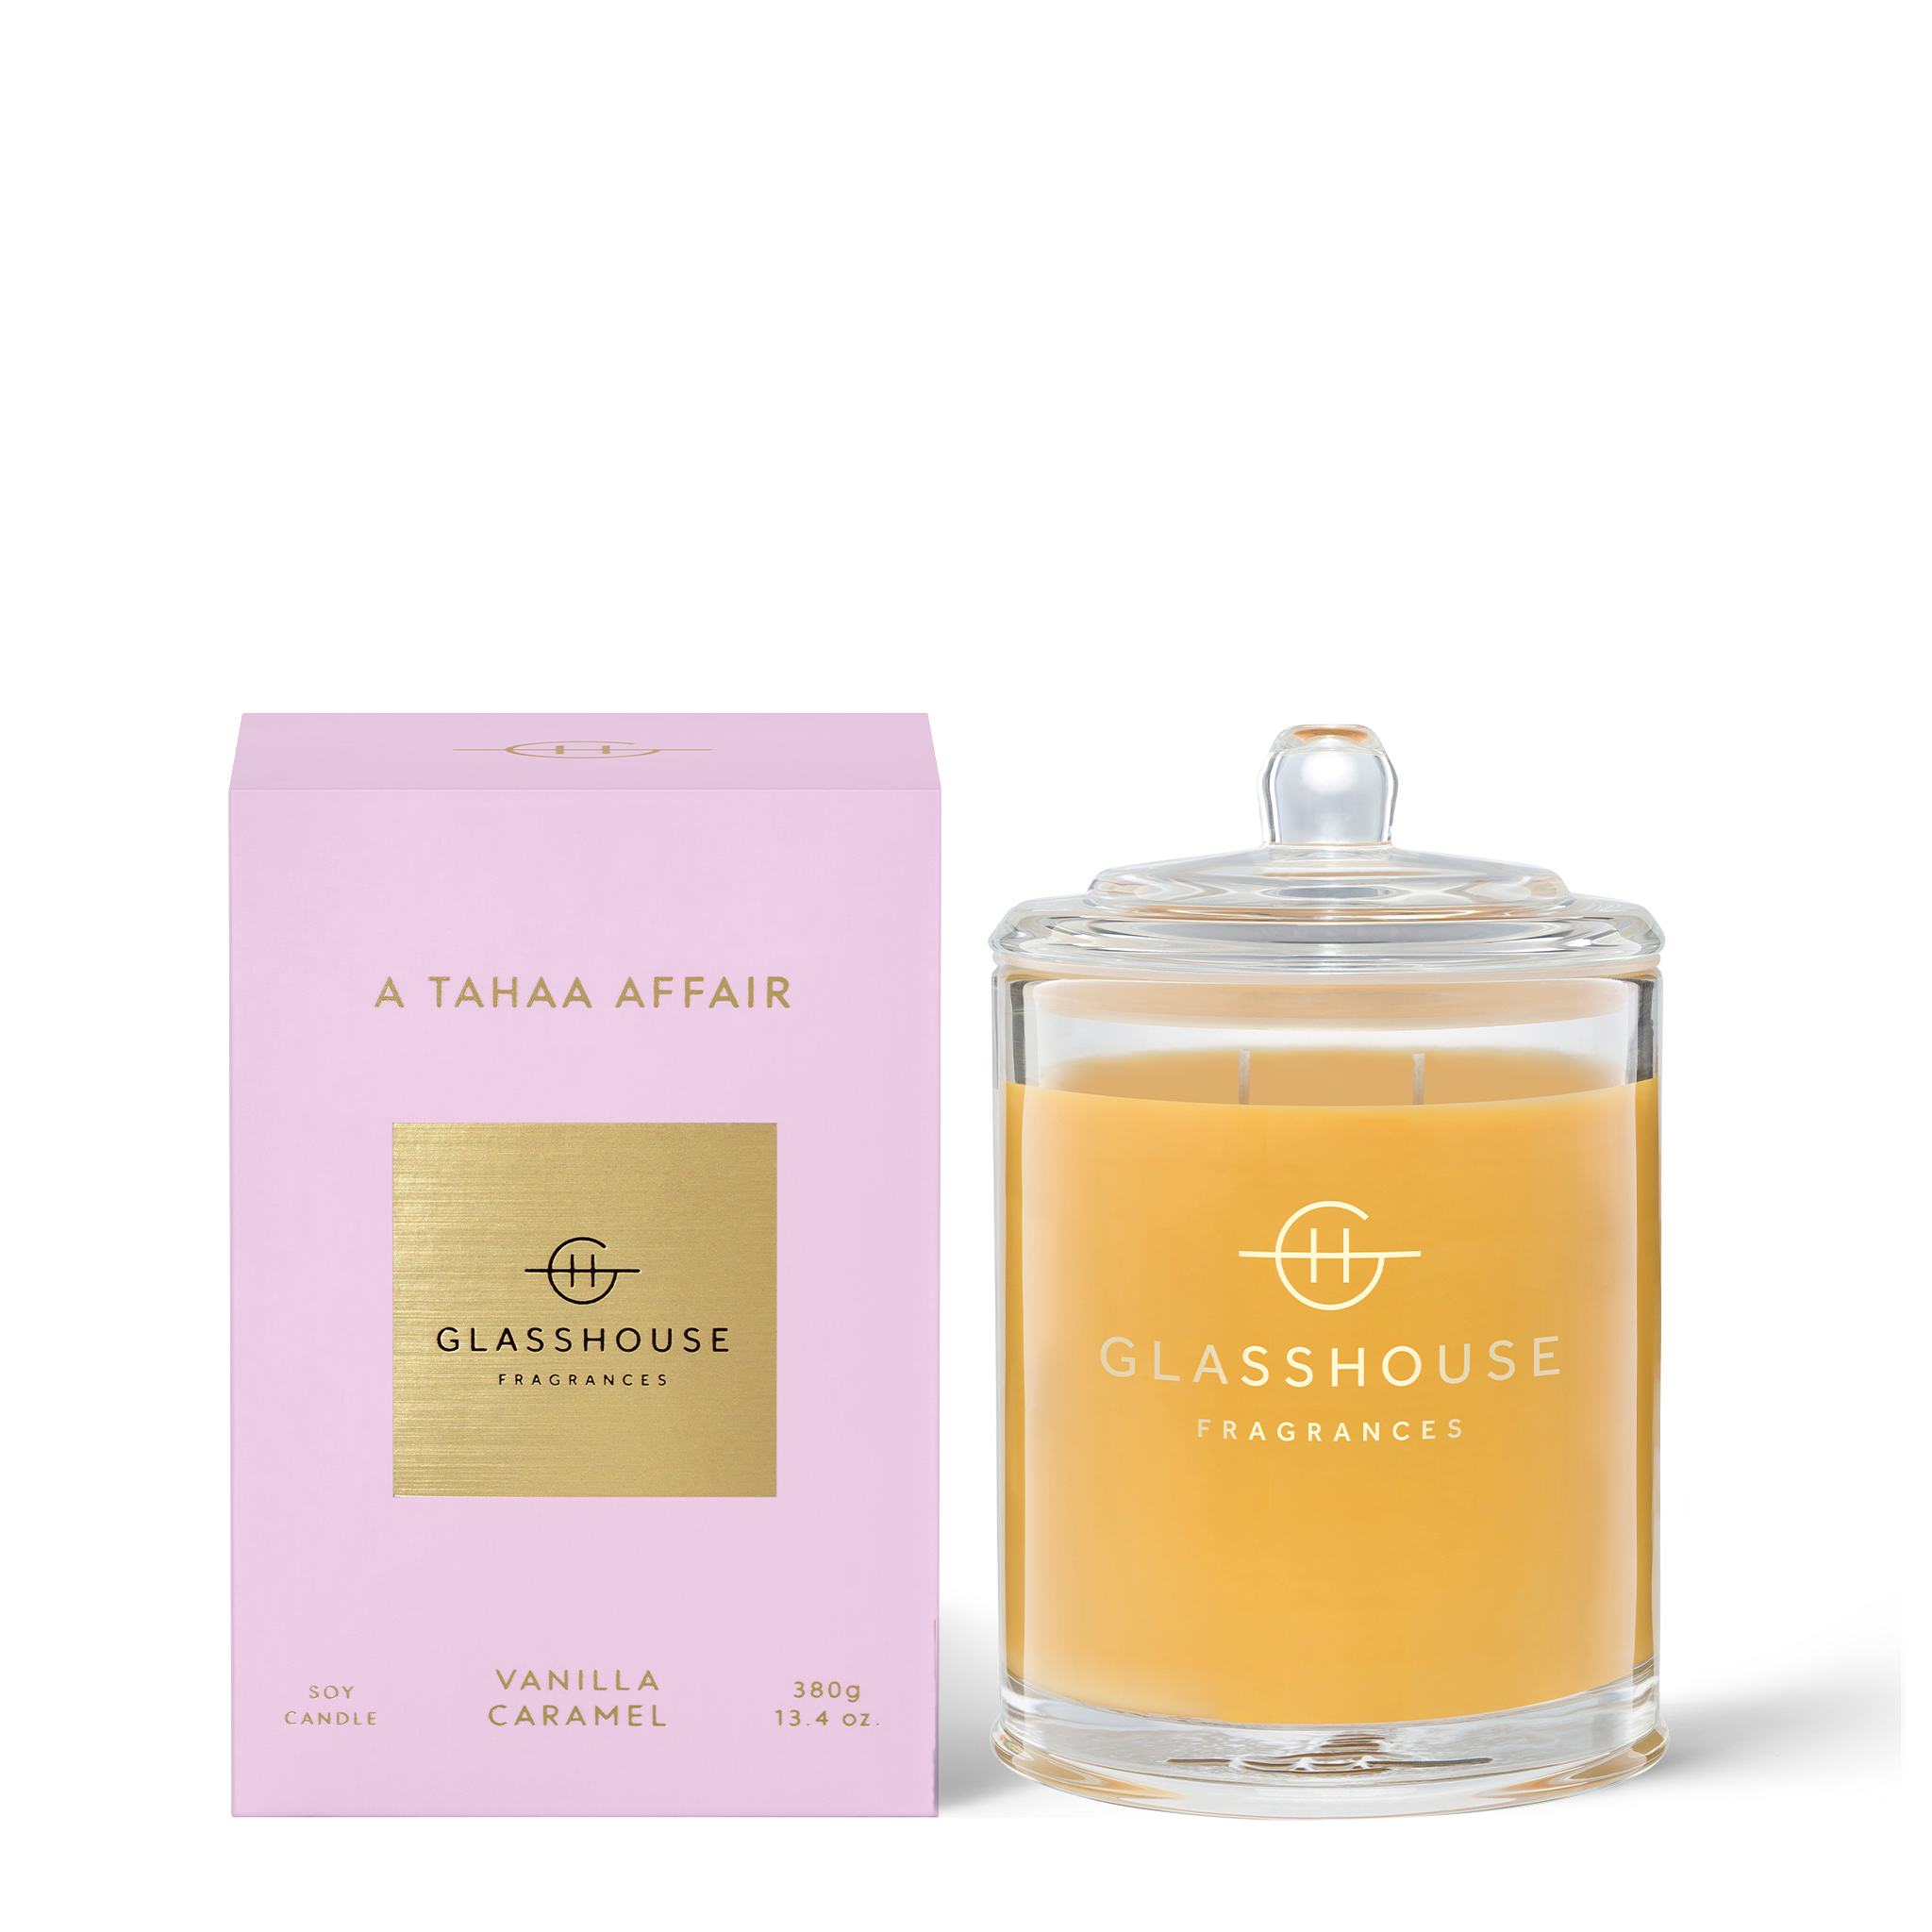 A TAHAA AFFAIR | Vanilla Caramel | 380g Soy Candle